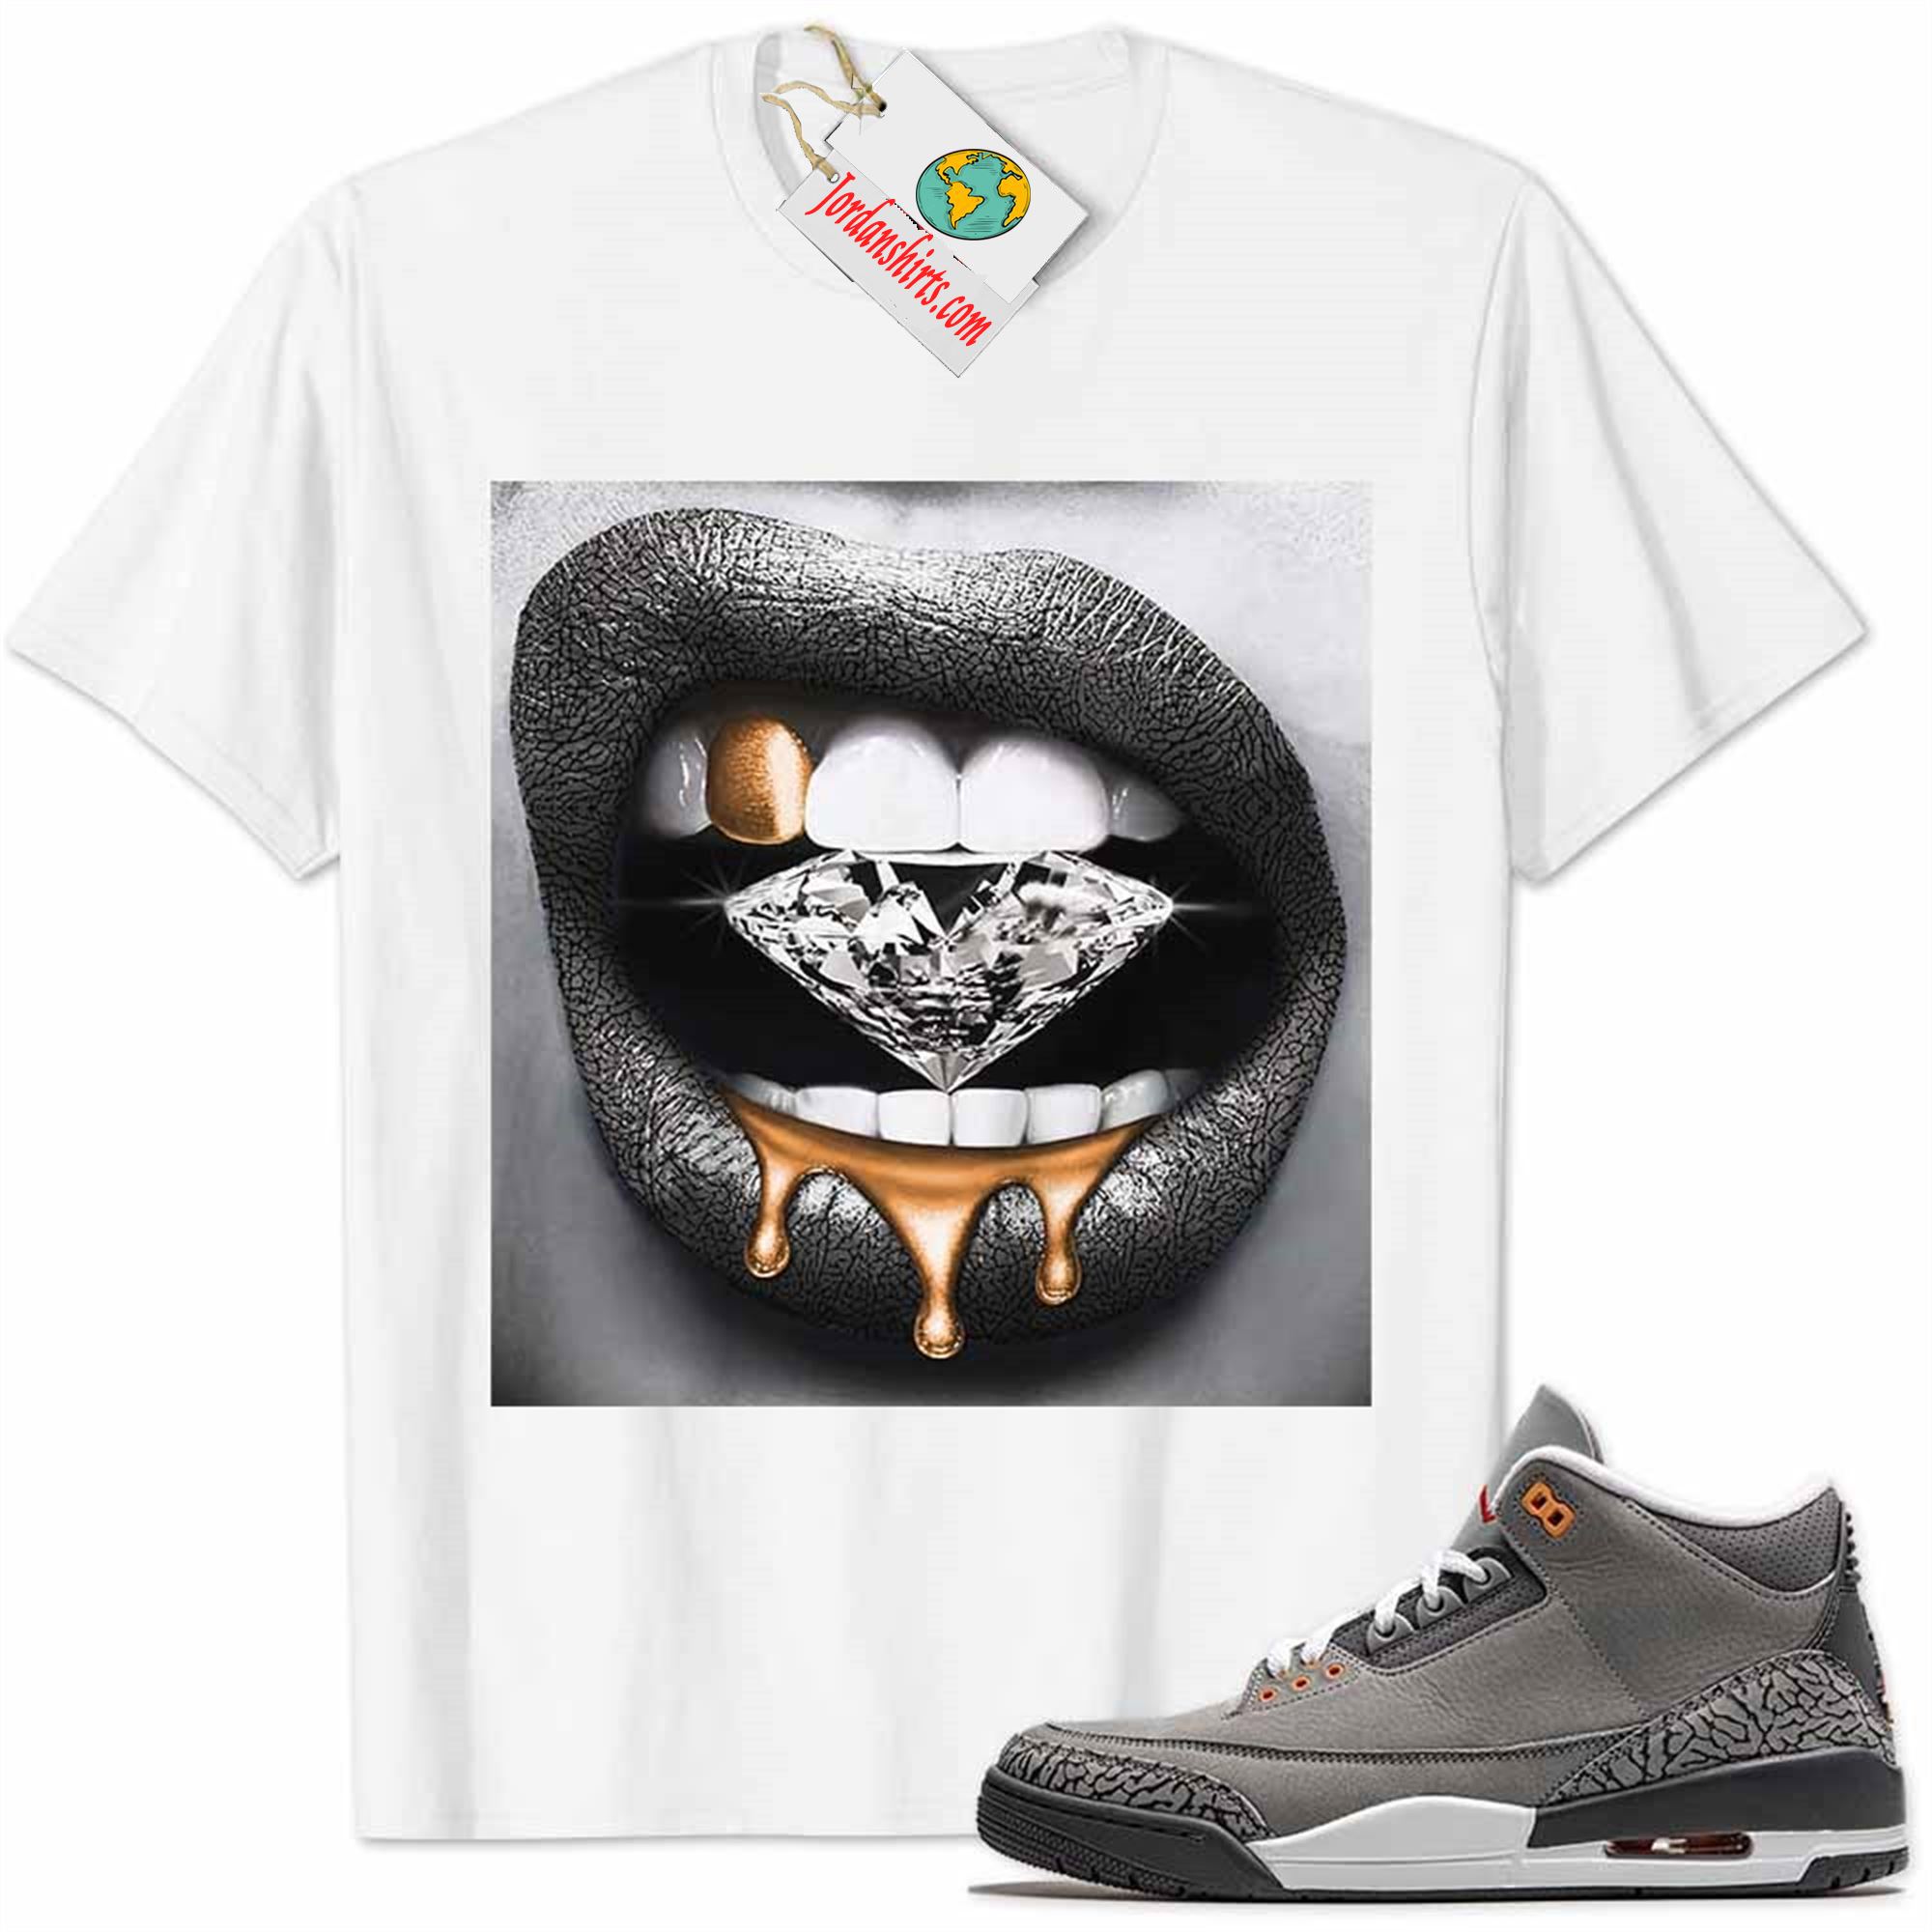 Jordan 3 Shirt, Jordan 3 Cool Grey Shirt Sexy Lip Bite Diamond Dripping White Size Up To 5xl